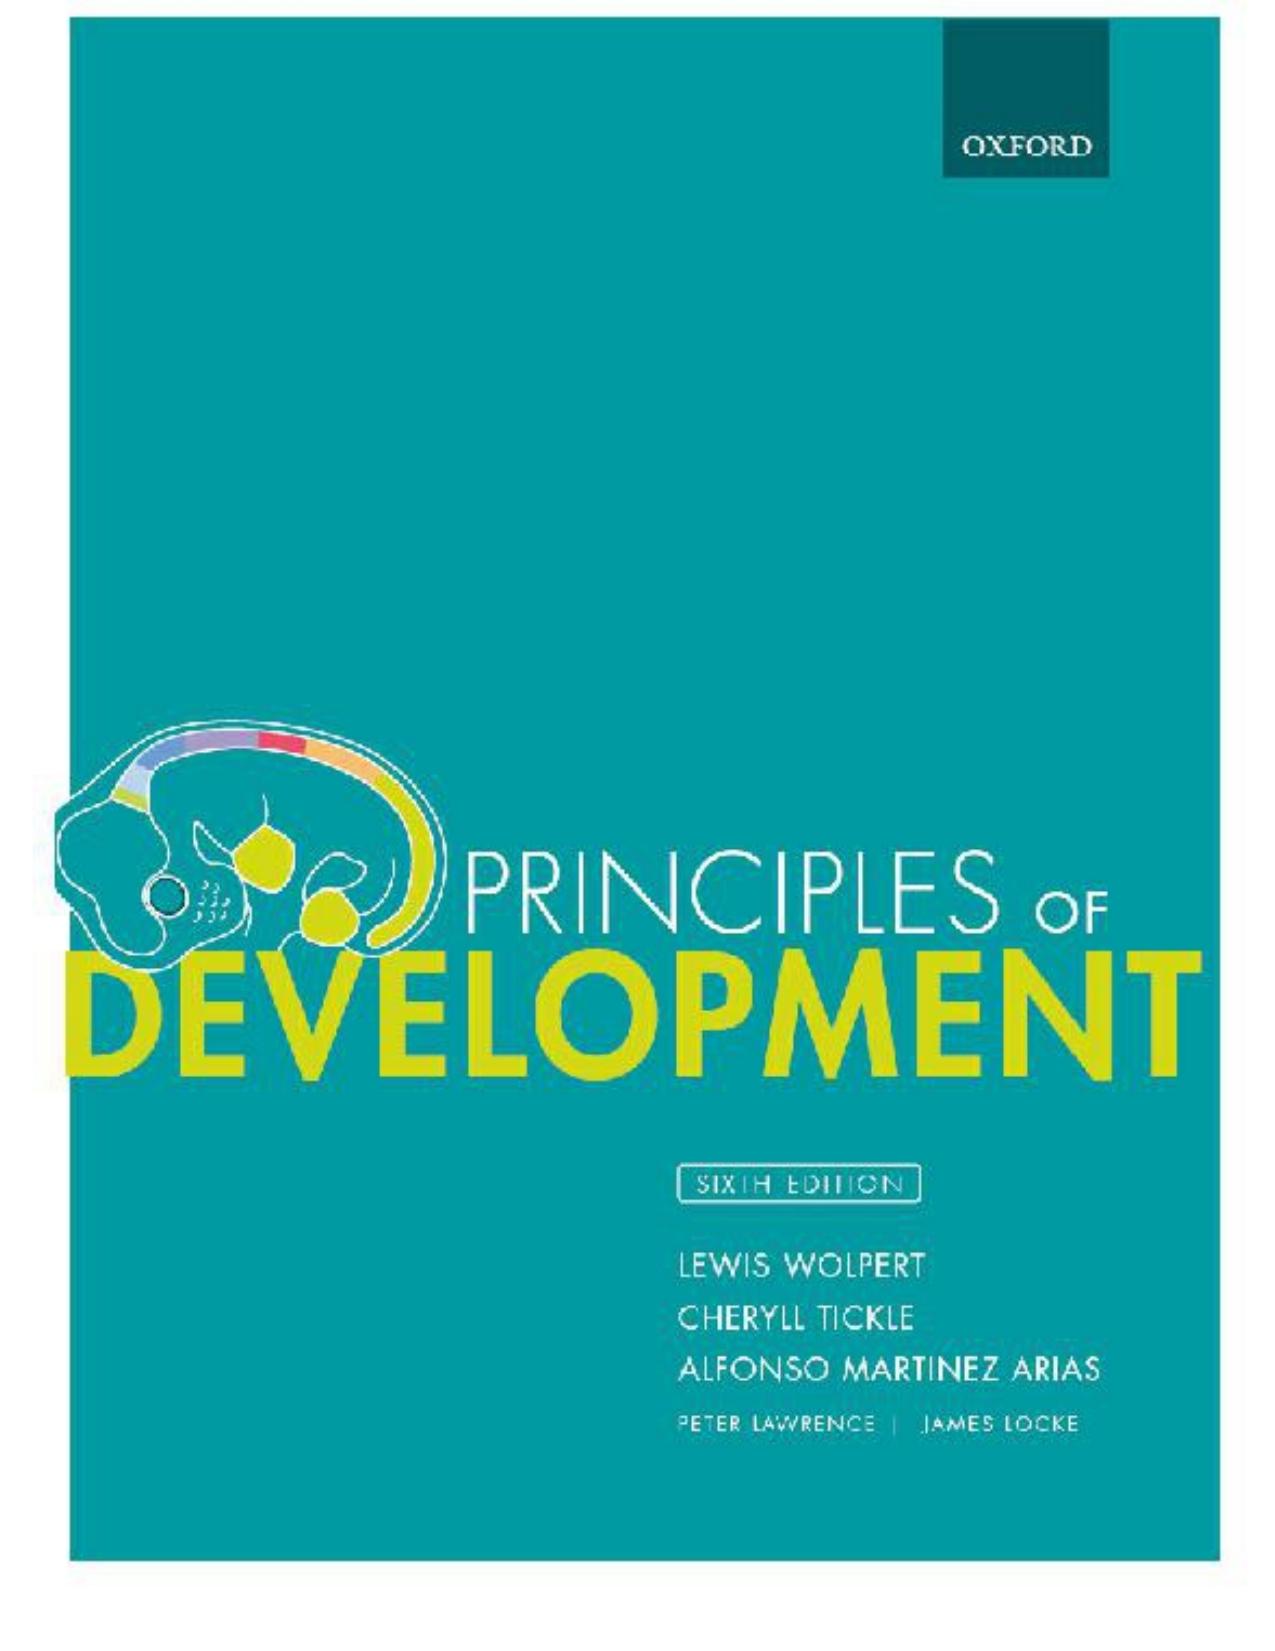 Principles of Development 6th Edition by Lewis Wolpert.jpg